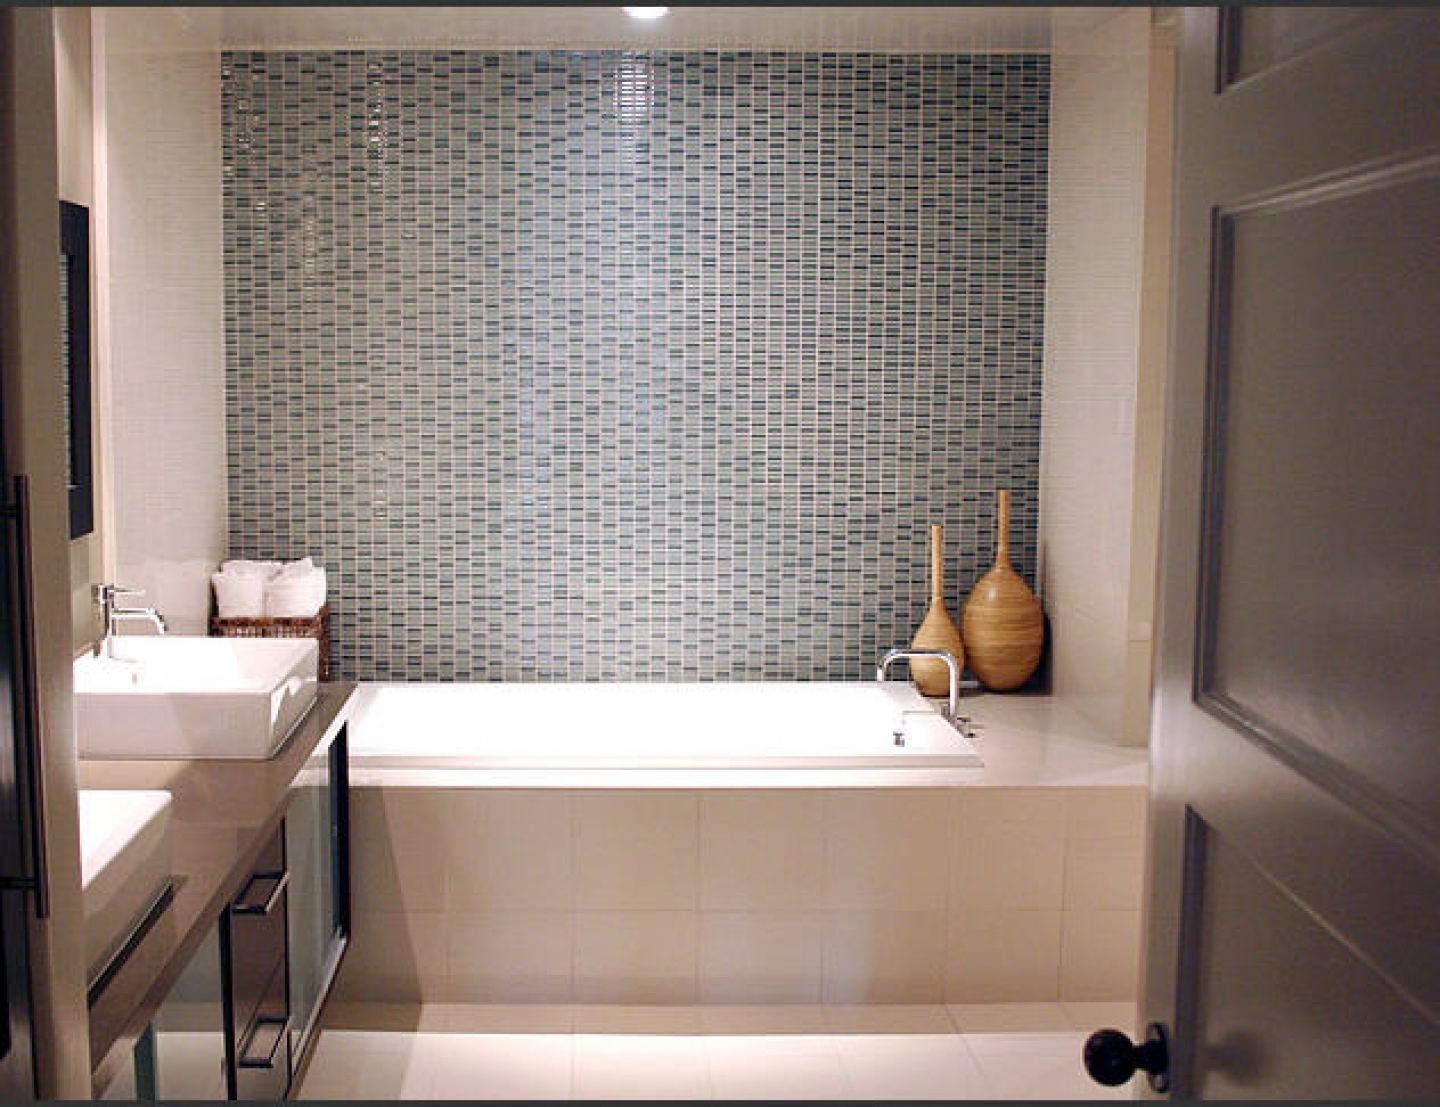 Best Small Bathroom Designs With Minimalist Bathtub White SInk Mirror Wall Tile Towel Lighting Ceiling Door And Nice Floor Bathroom